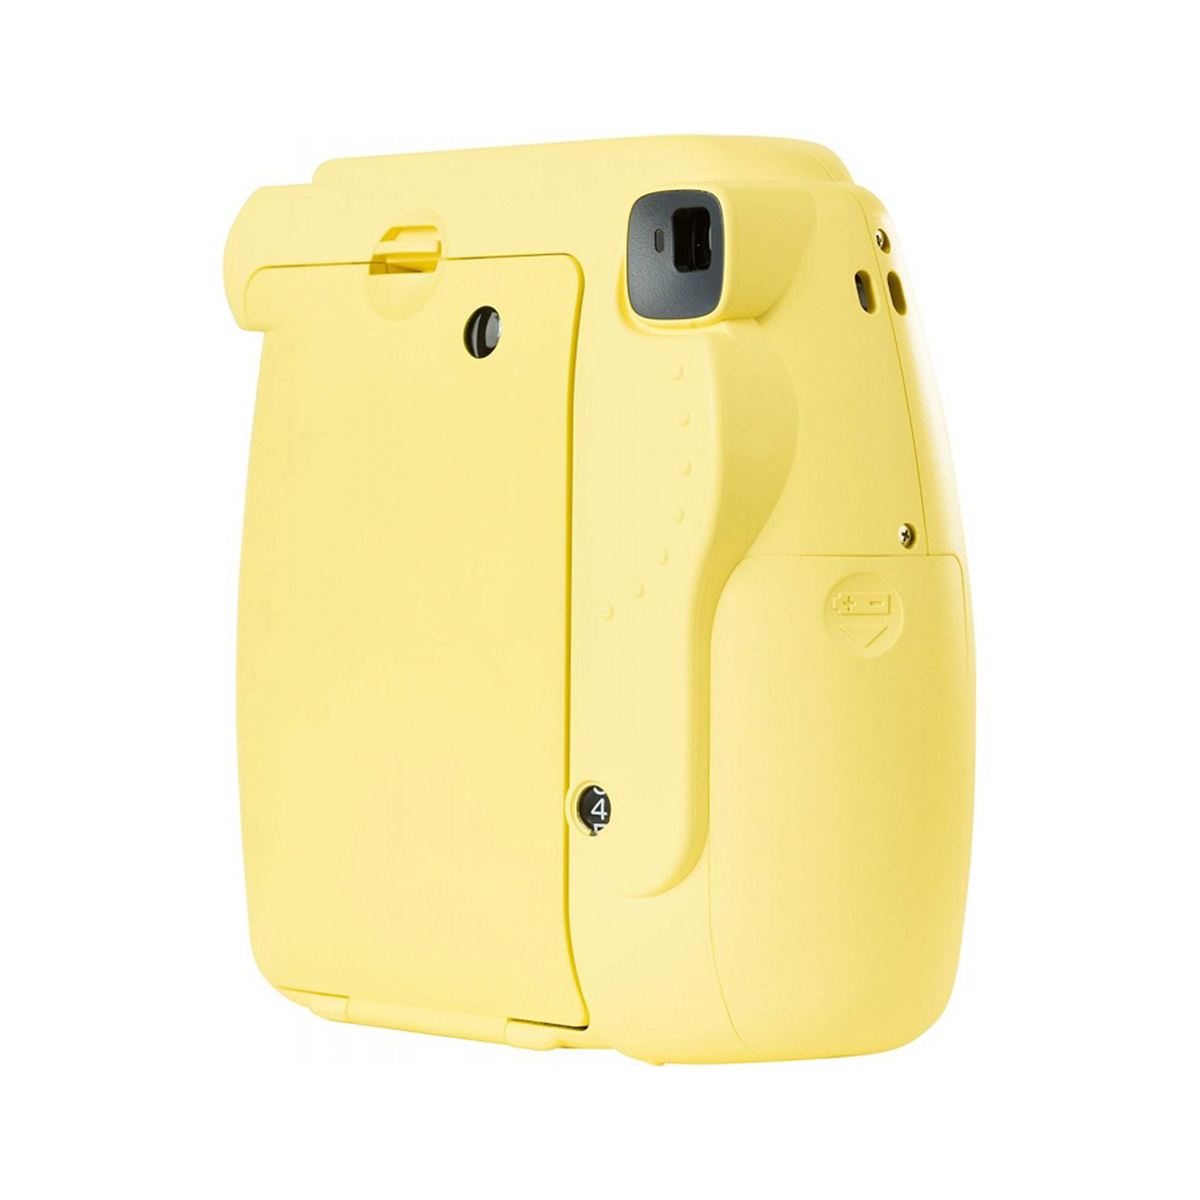 Fujifilm Instax Mini 8 Instant Camera Yellow